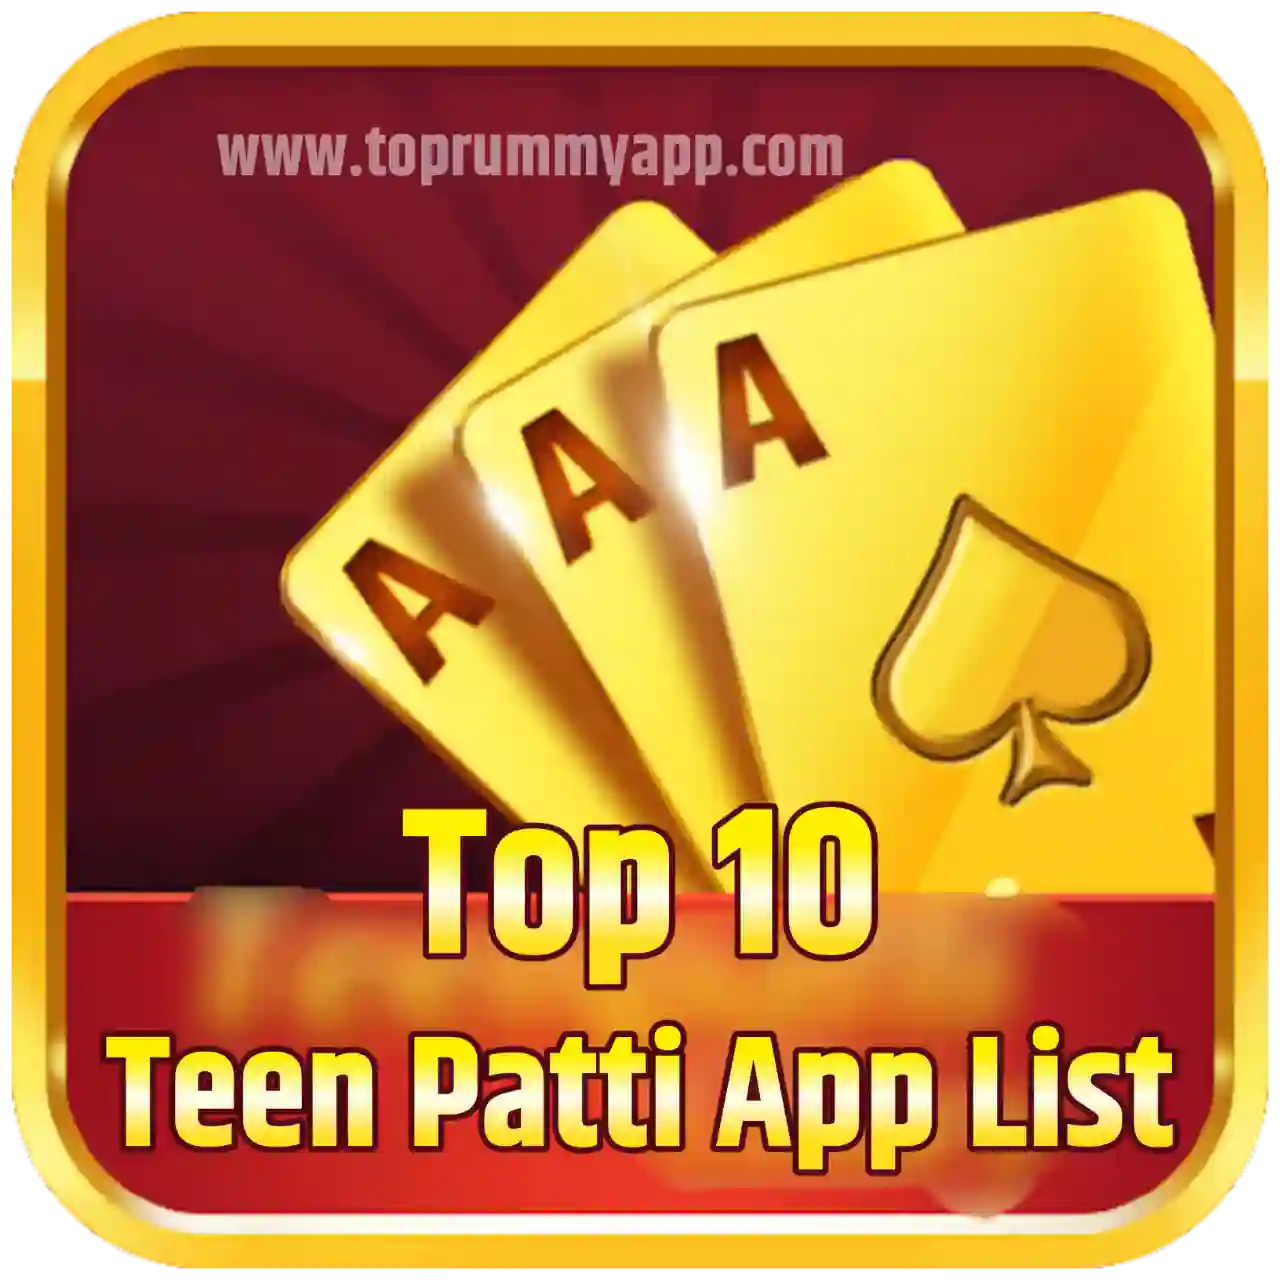 Top 10 Teen Patti App List - Top 10 Teen Patti App List 41 Bonus